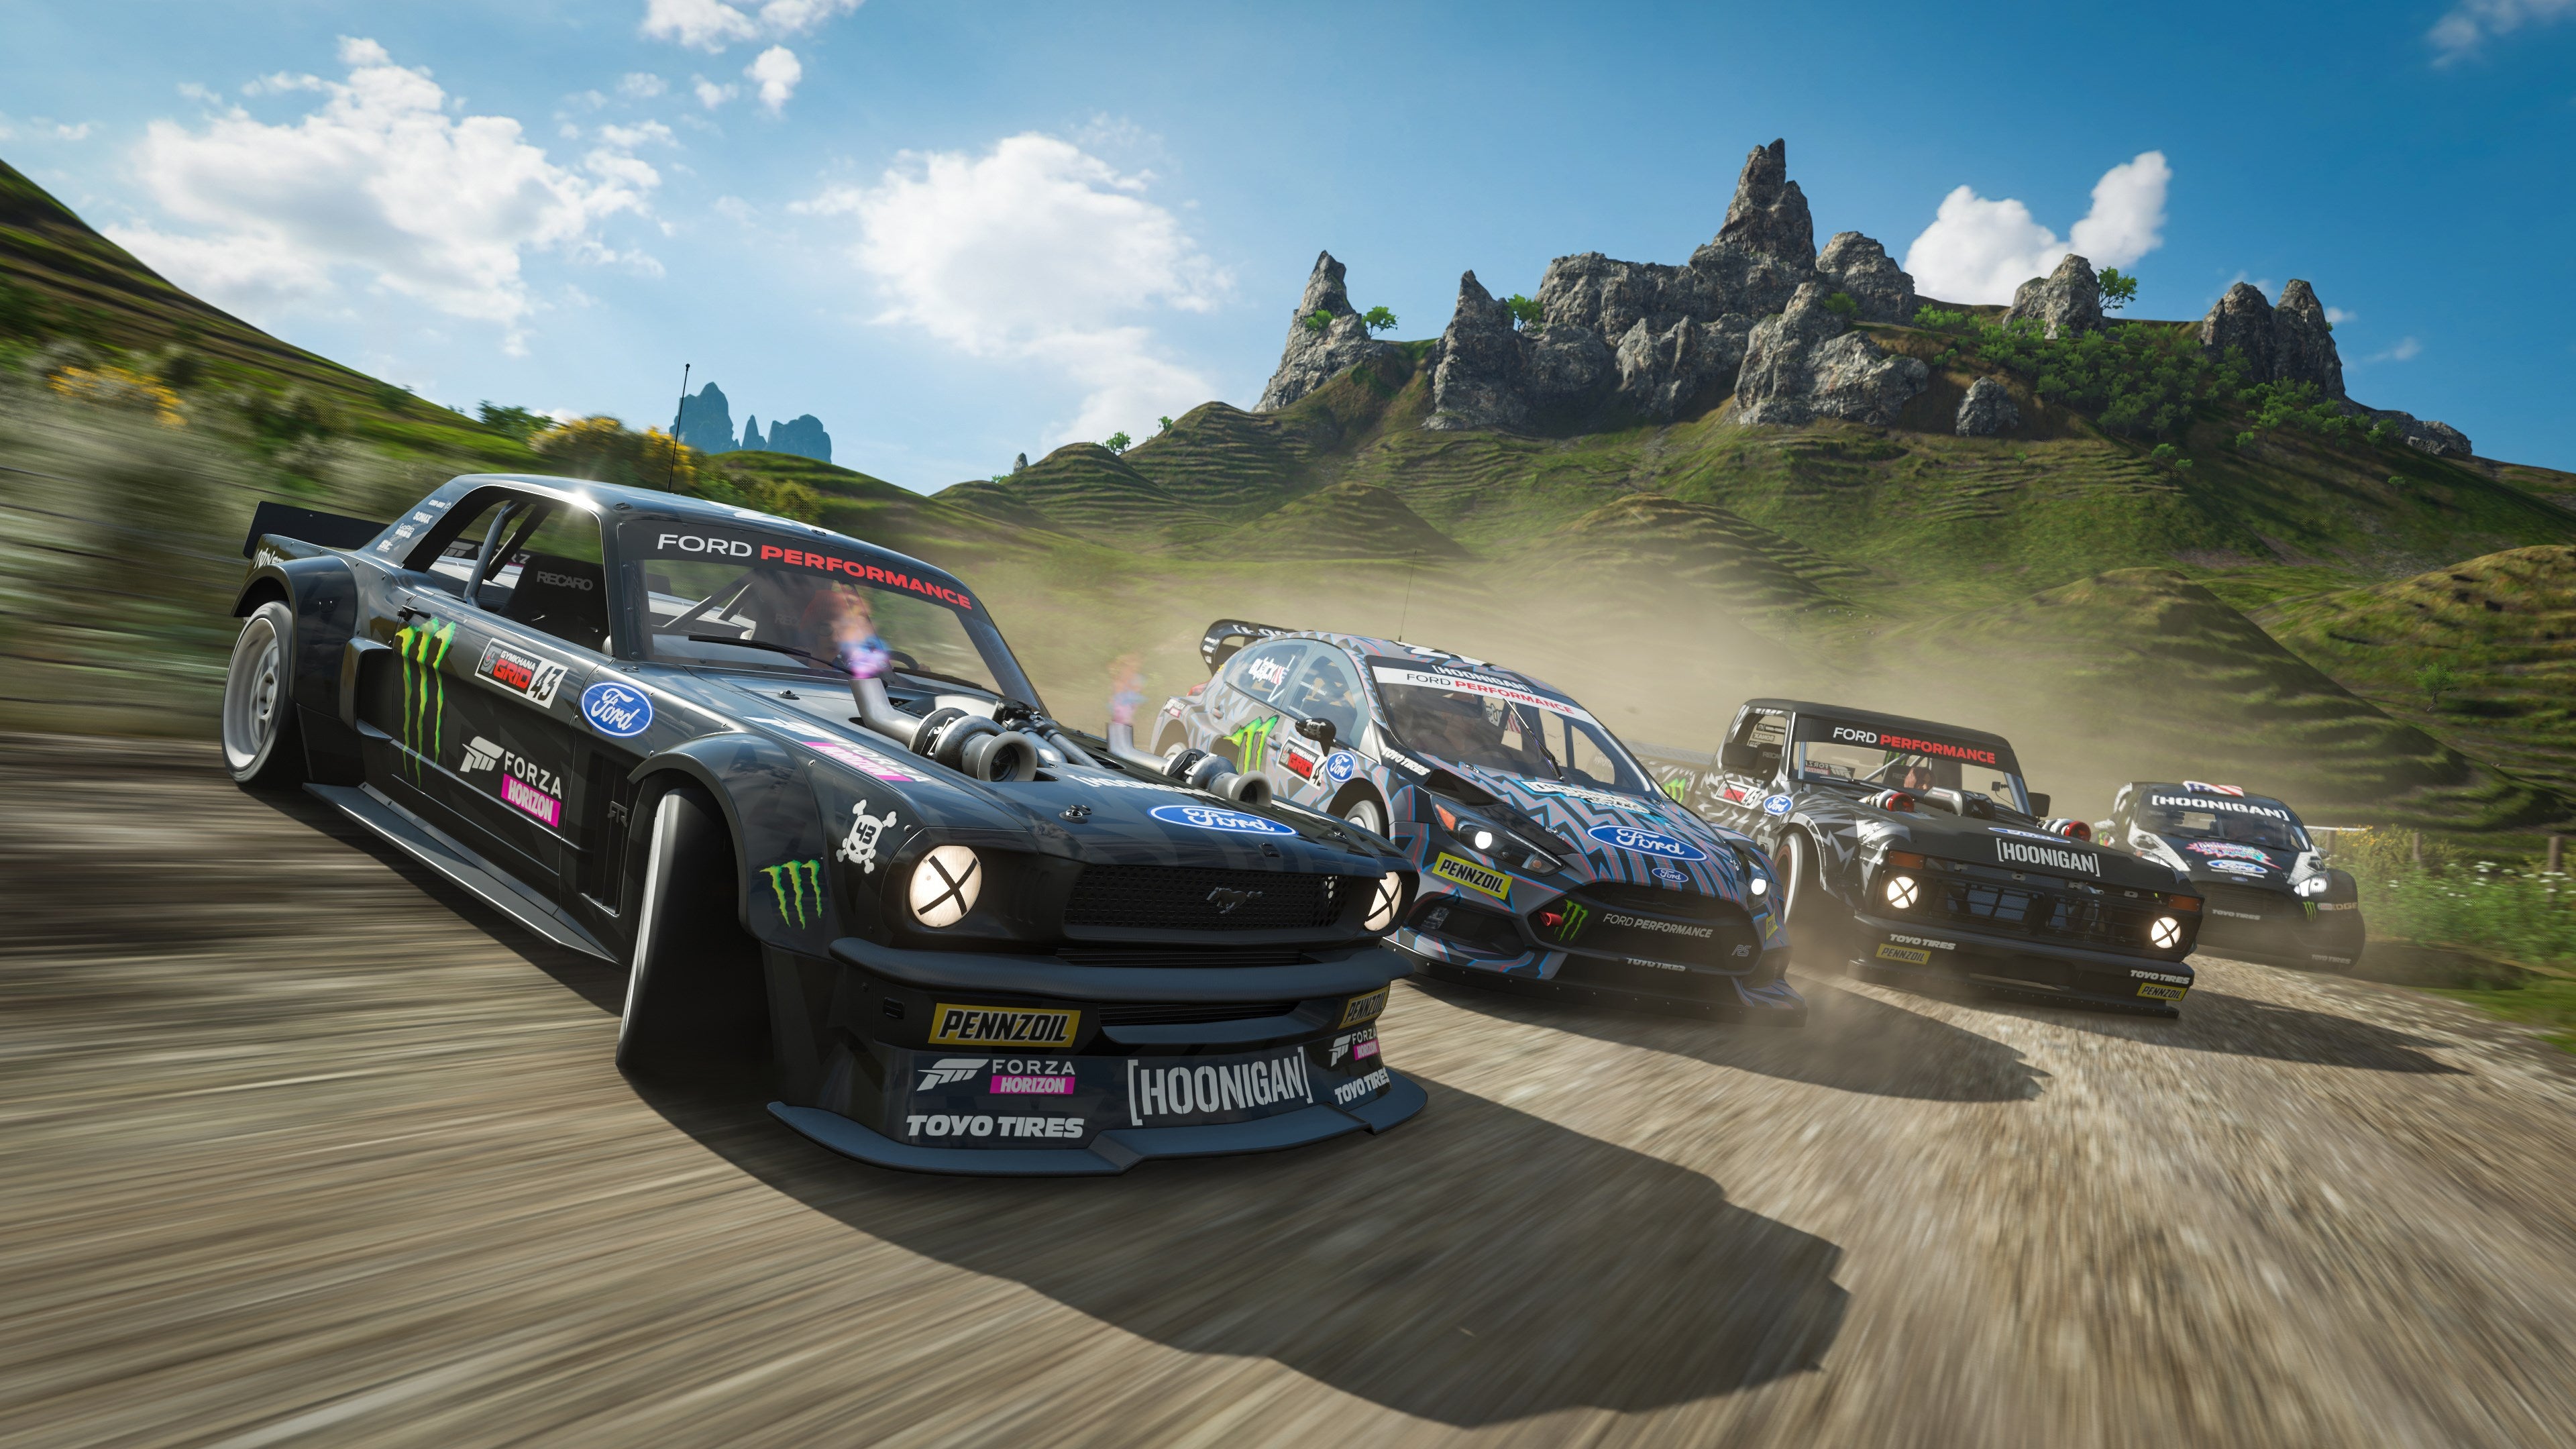 Forza Horizon veterans found new studio focused on open-world "premium” games